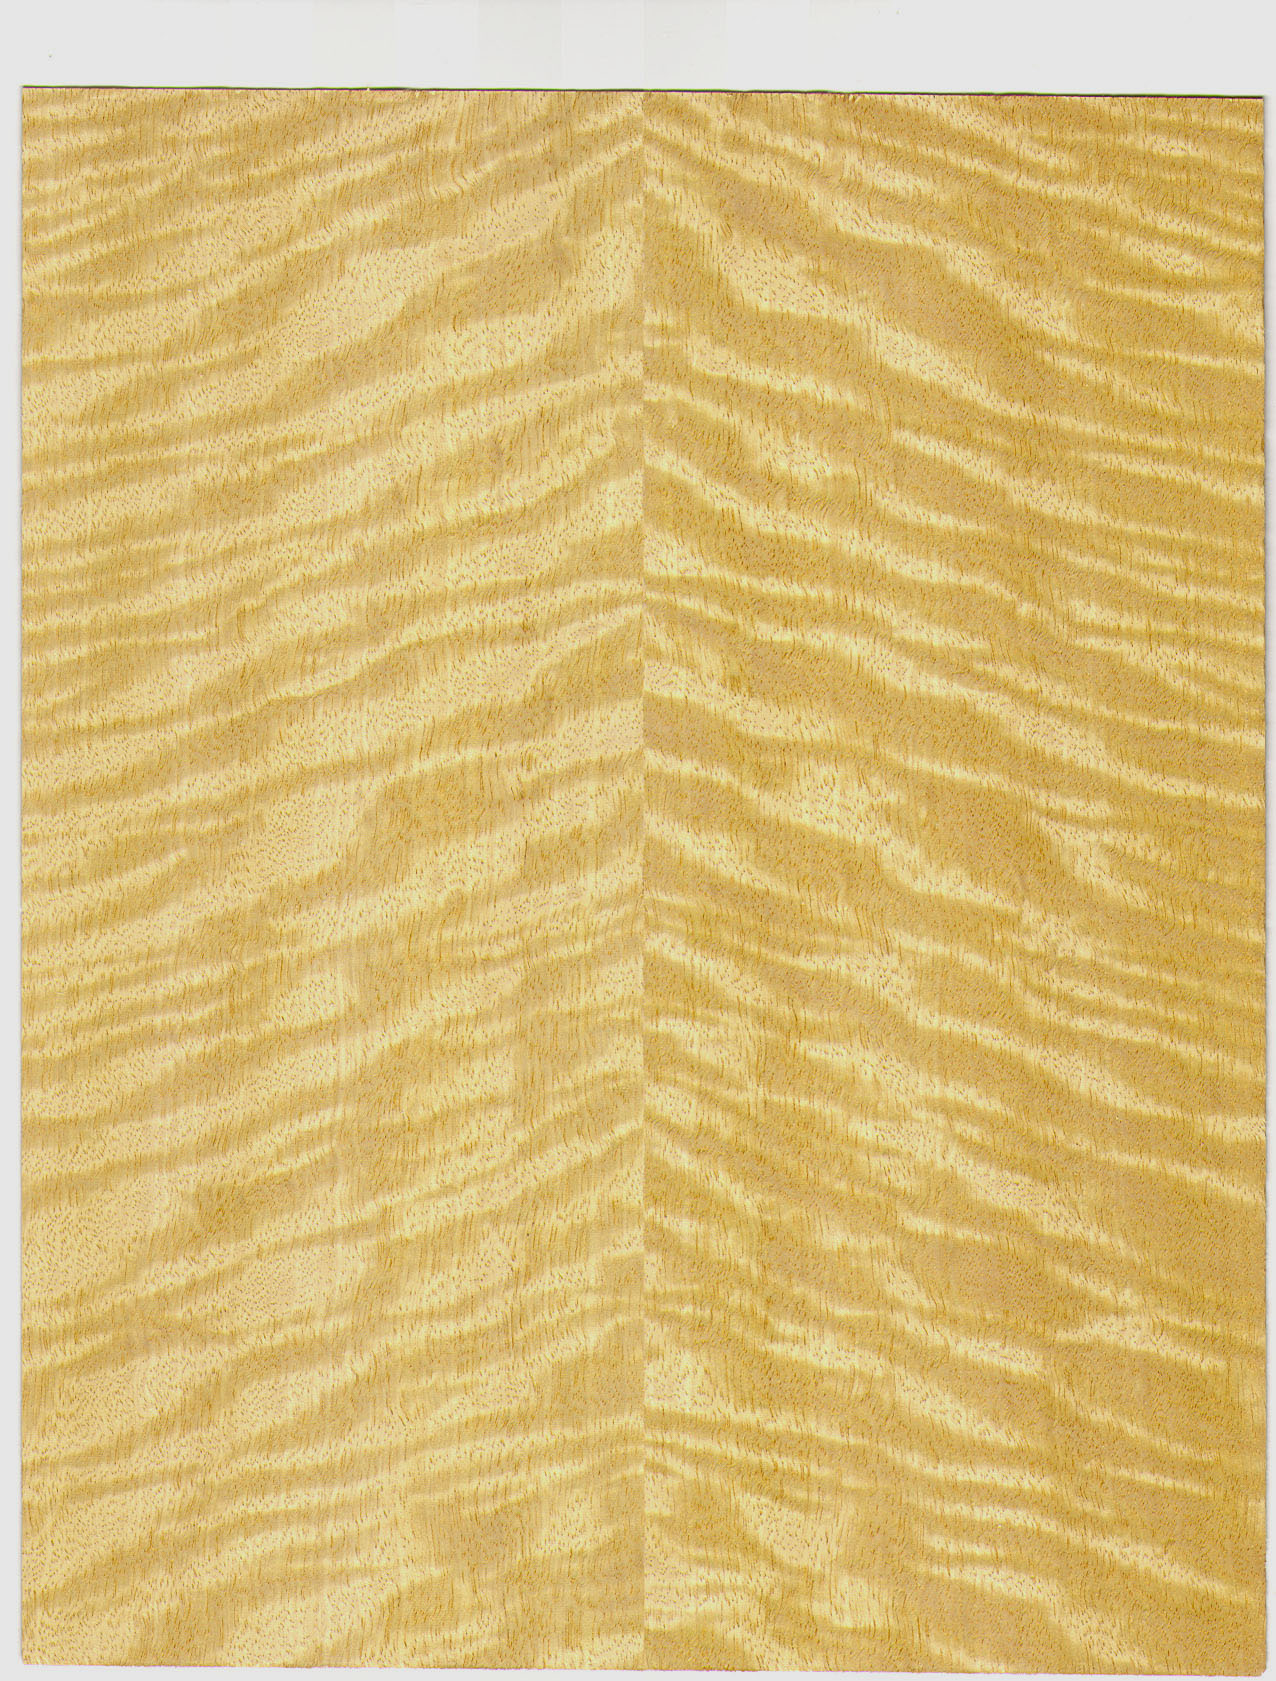 Дерево текстура, ламинат, скачать фото фон, wood background texture image